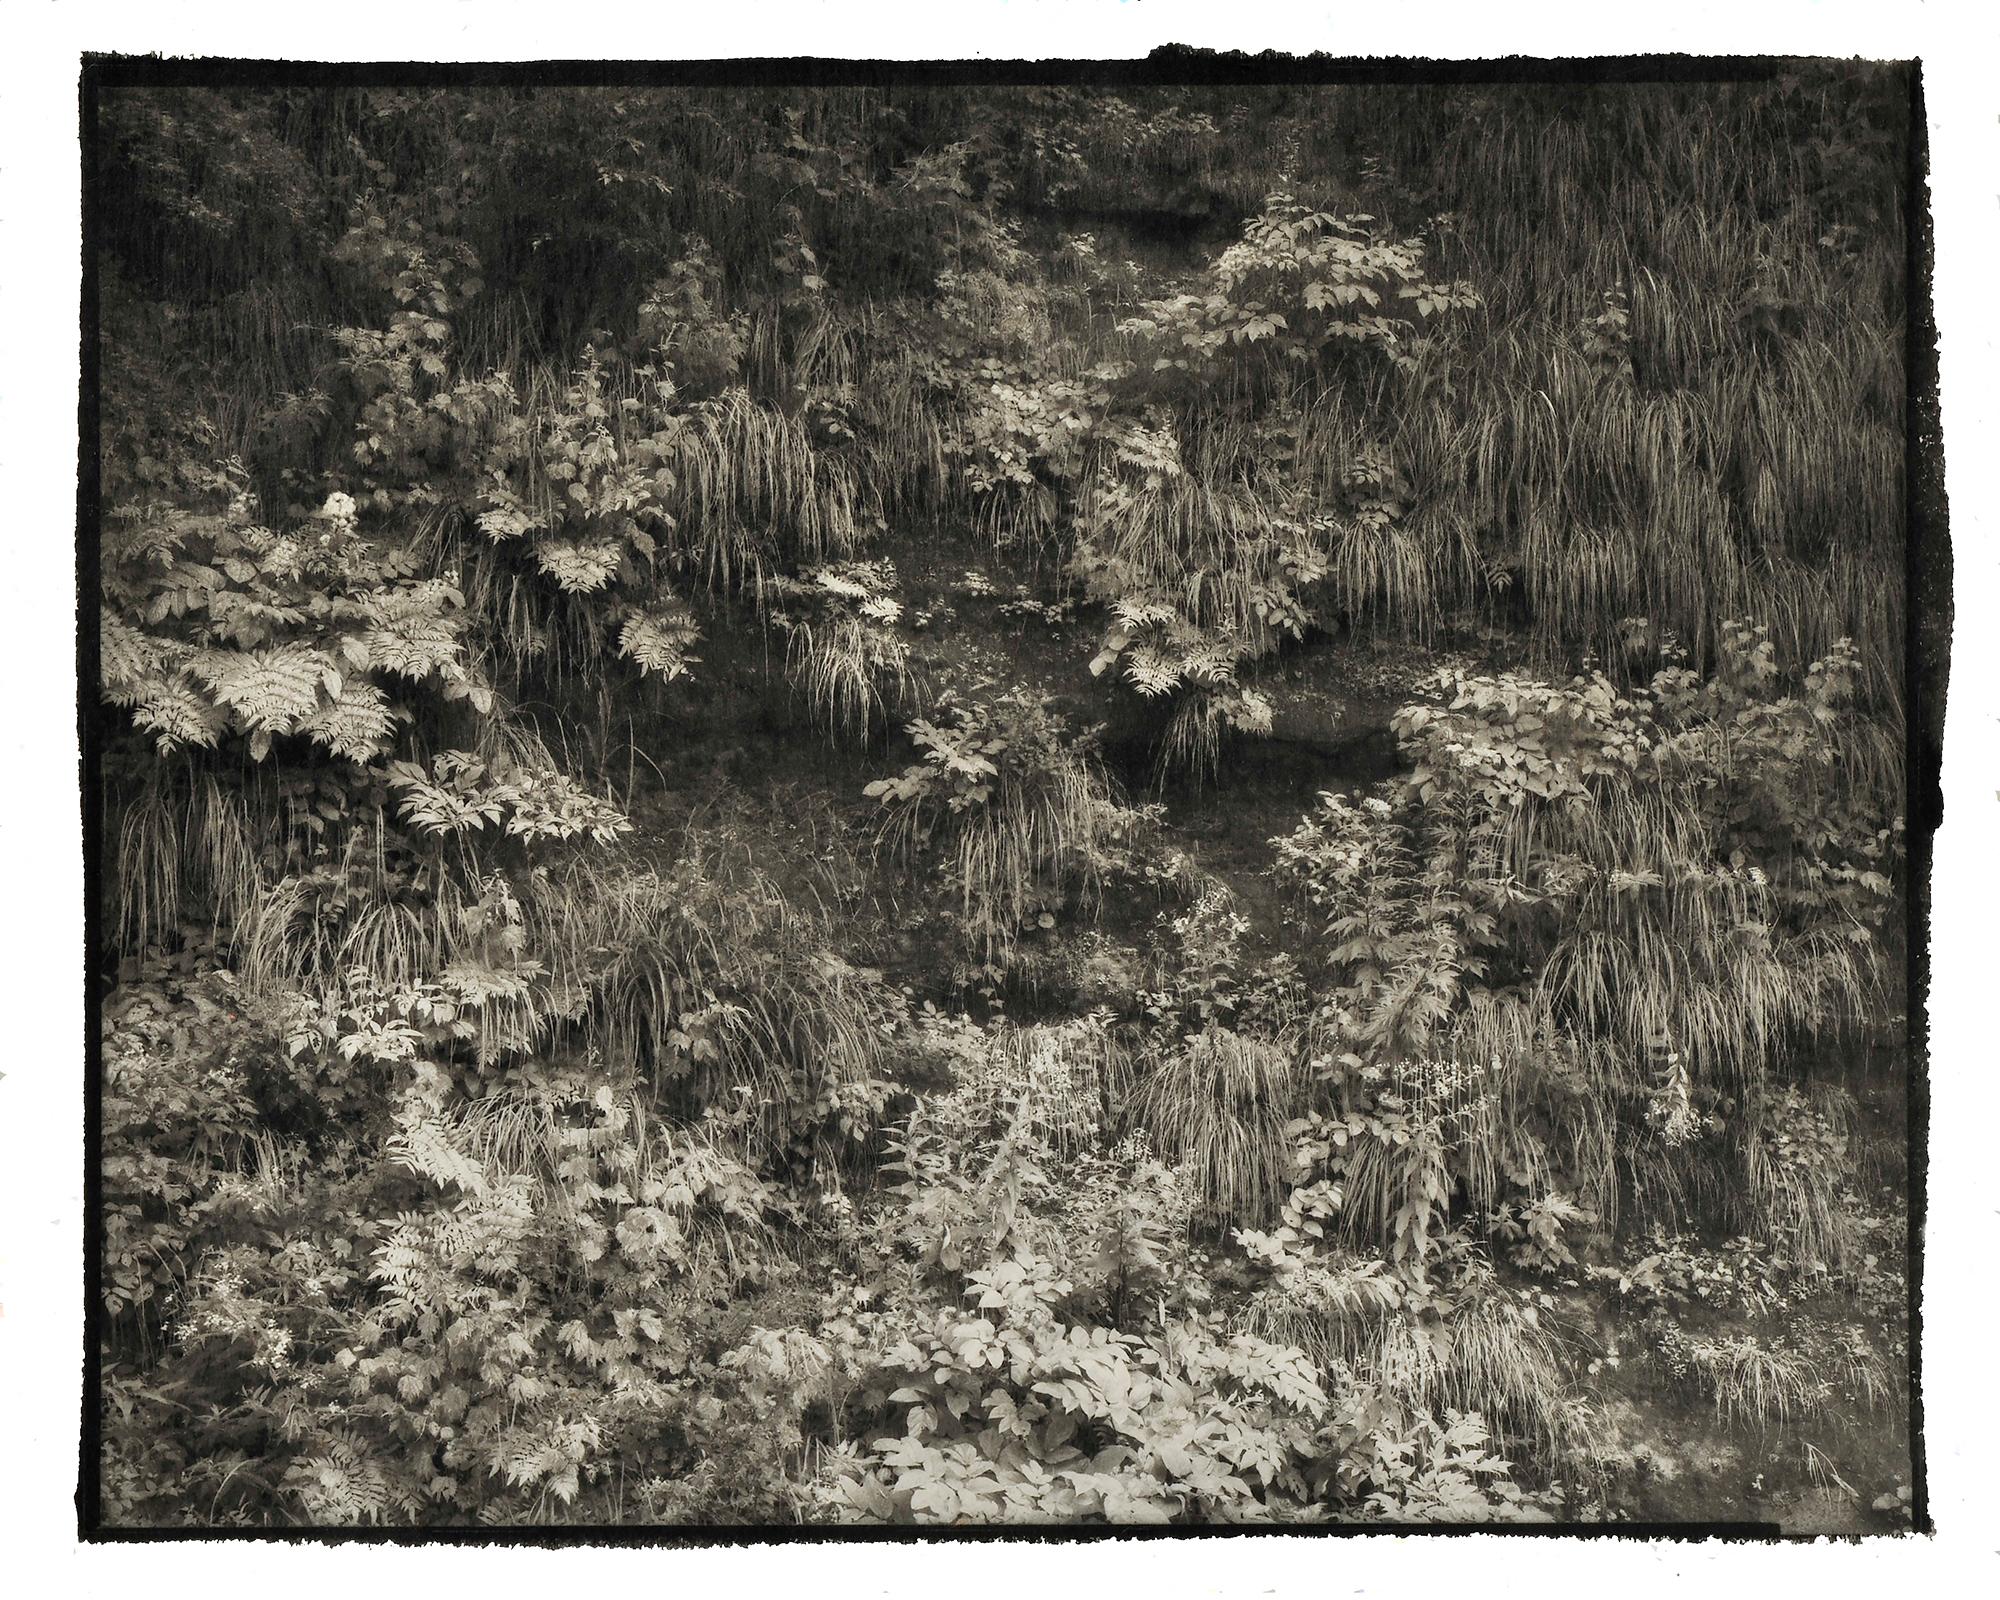 Nobuyuki Kobayashi Landscape Photograph - Kei 2 - 21st Century, Platinum/Palladium Print, Contemporary B&W photography